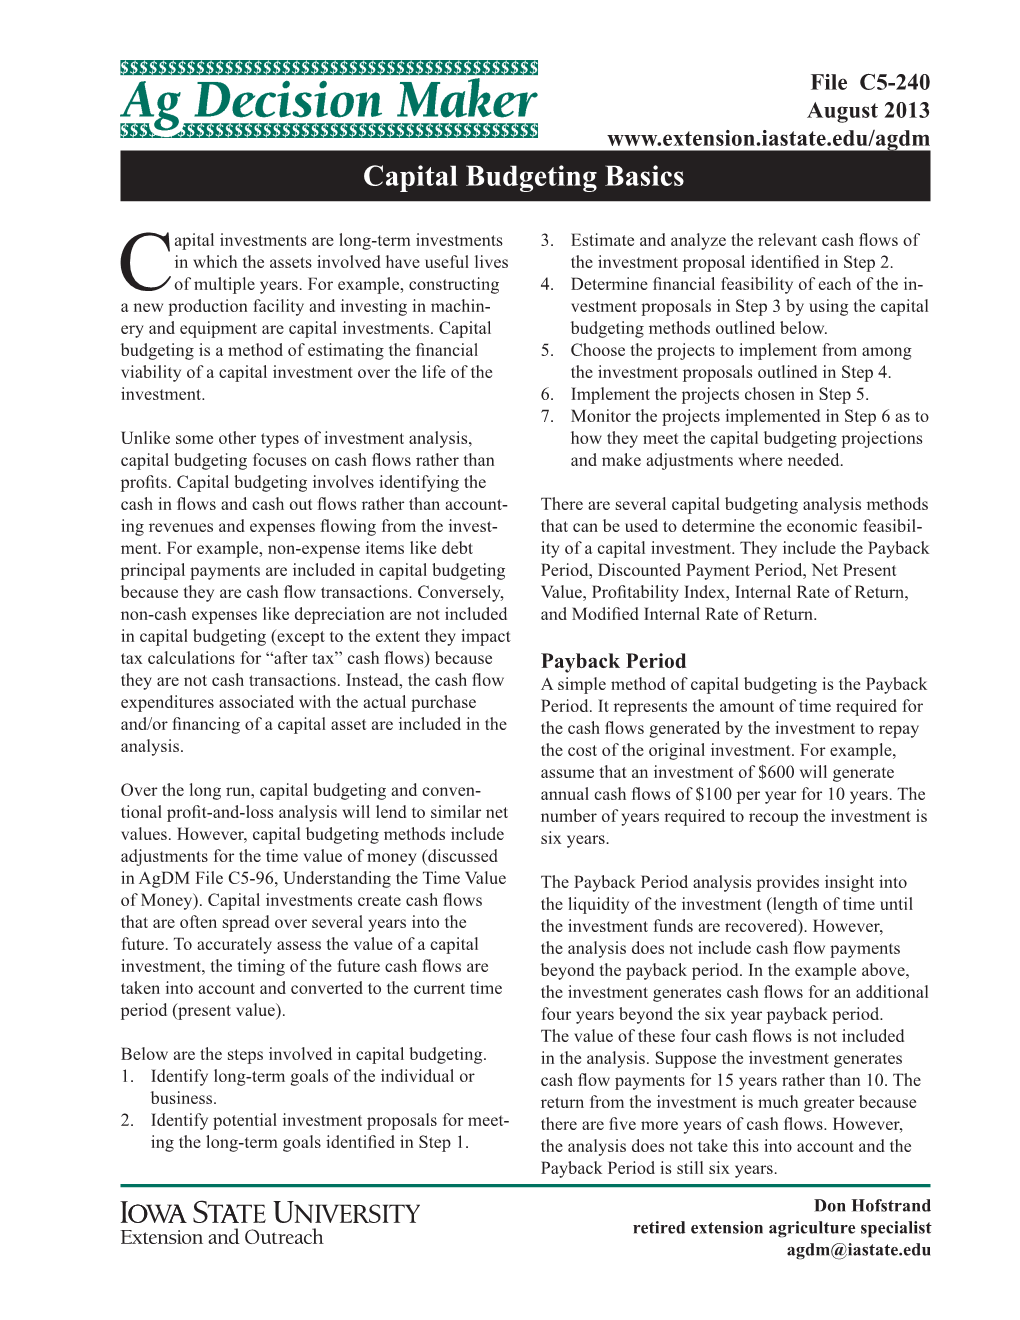 Capital Budgeting Basics